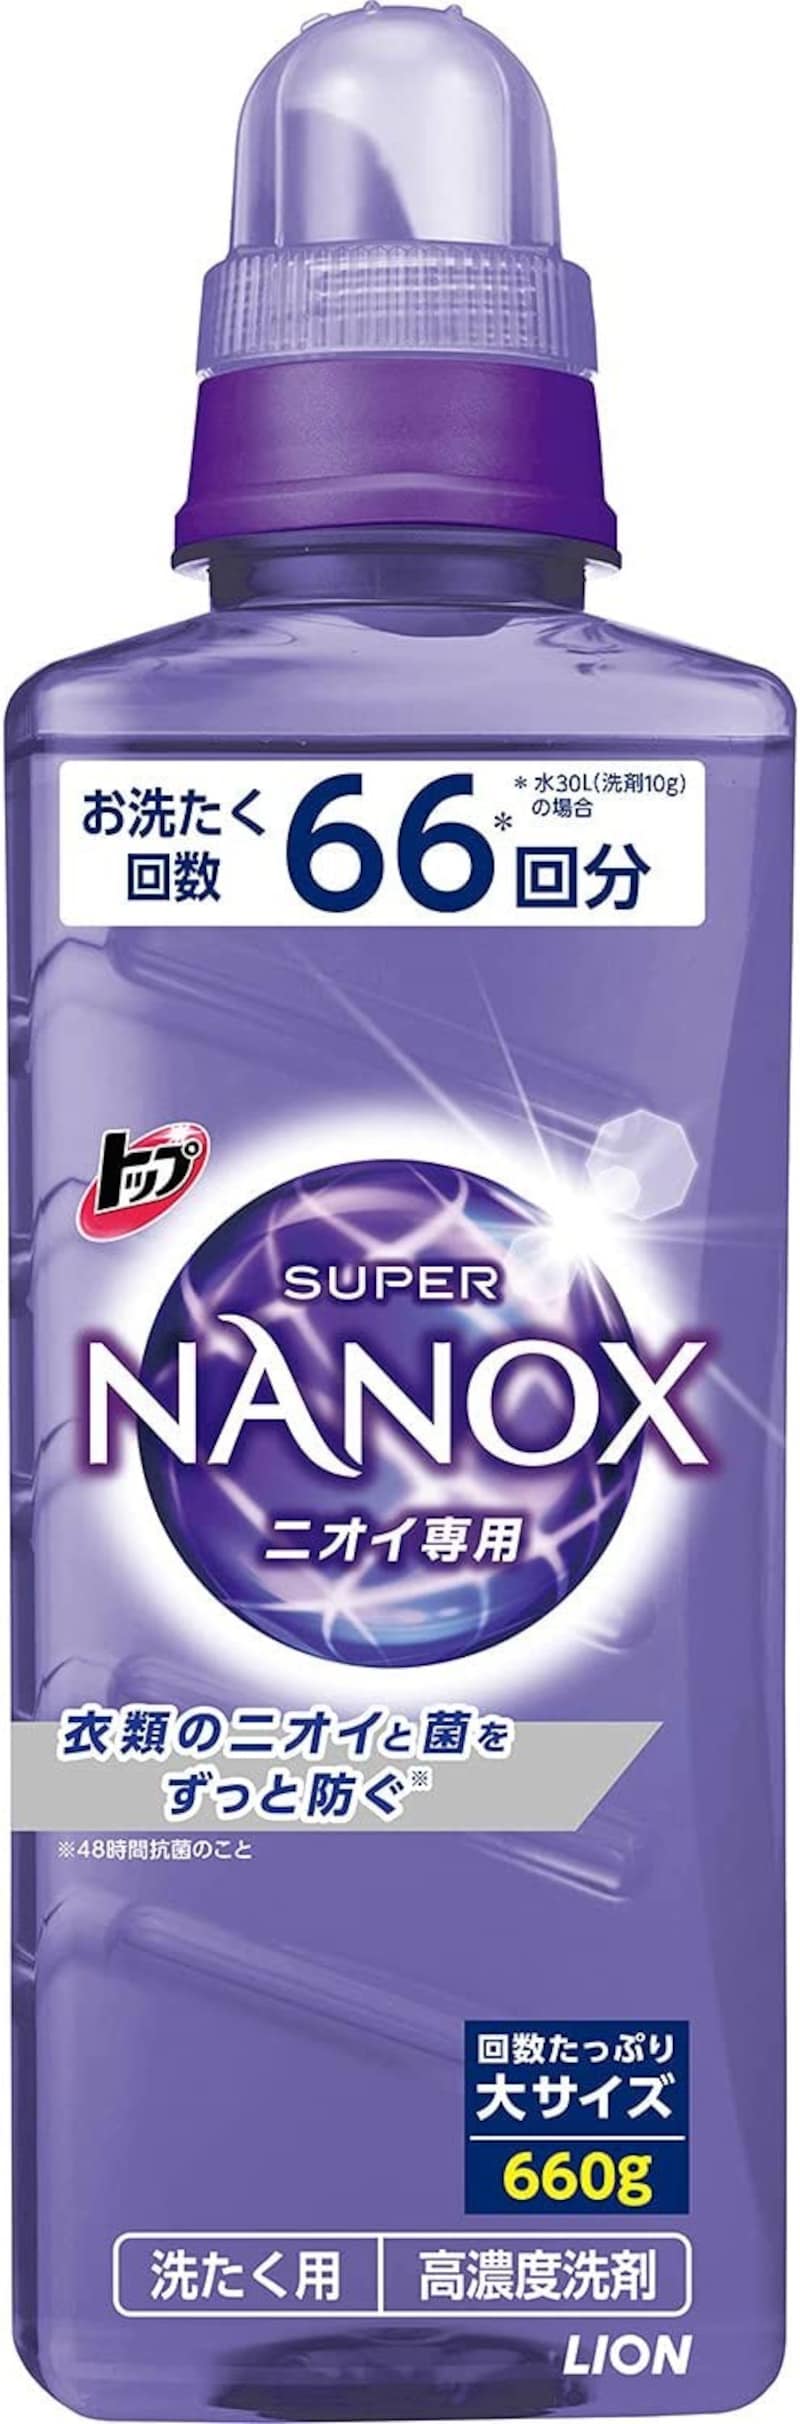 NANOX（ナノックス）,スーパーナノックス ニオイ専用 プレミアム抗菌処方